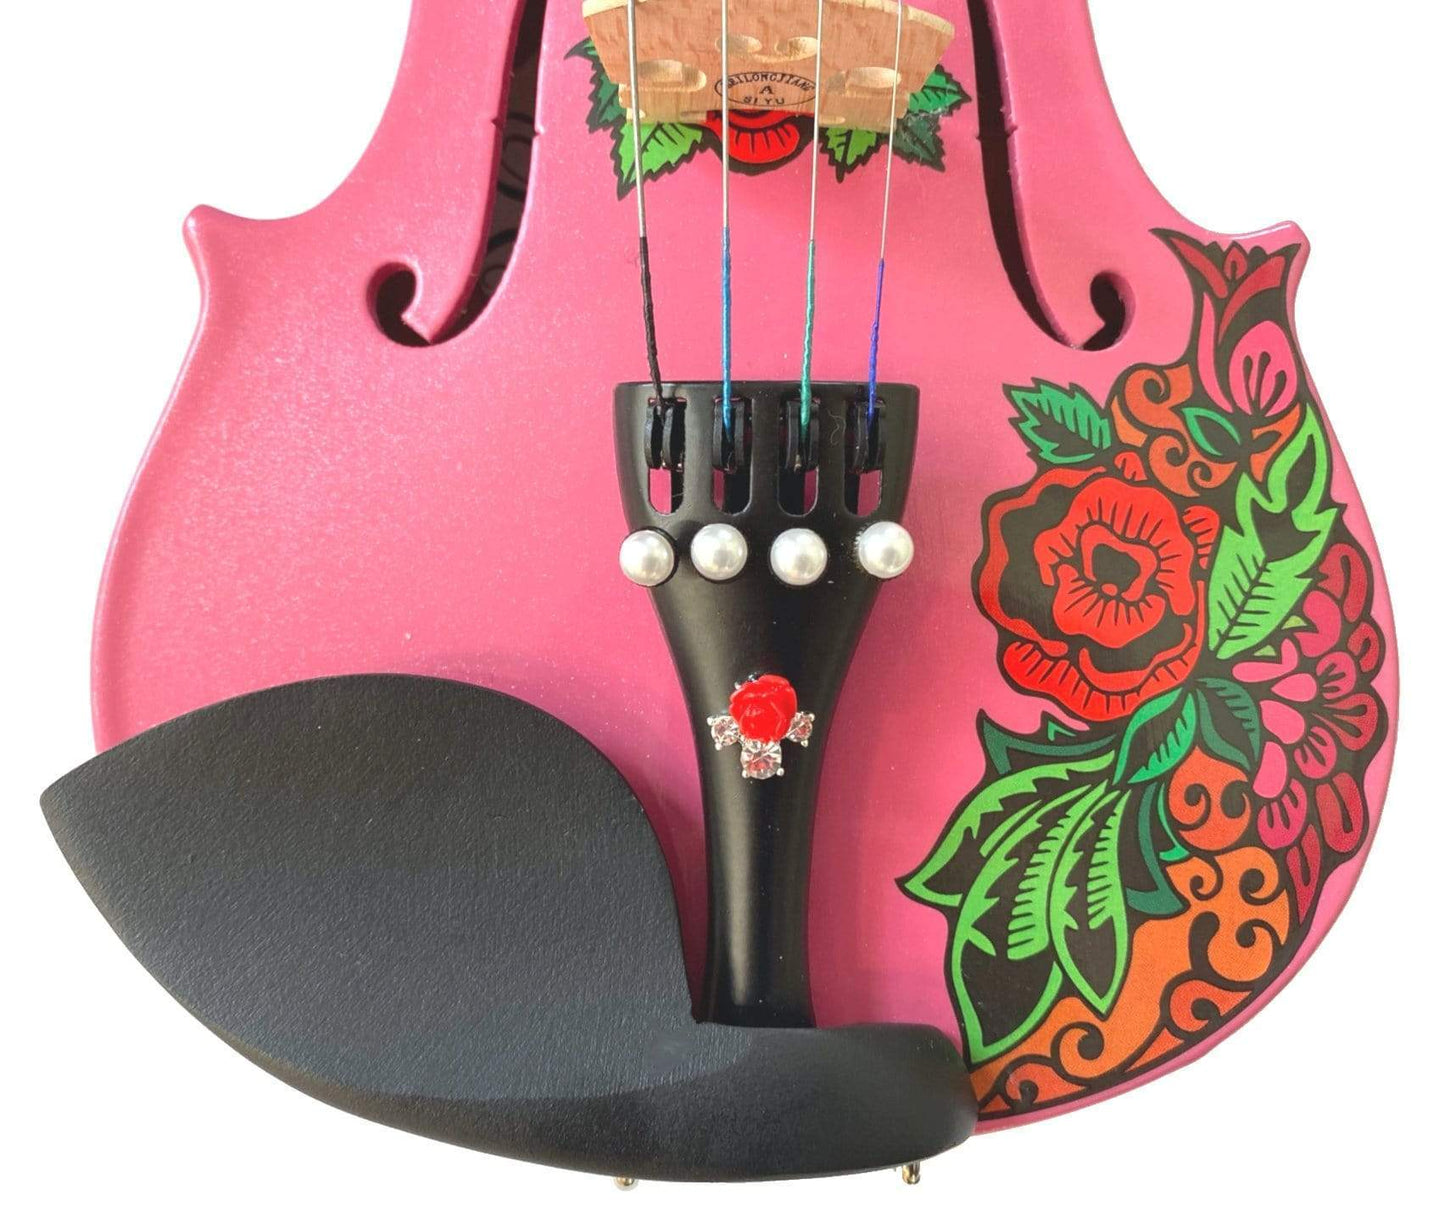 Rozanna's Violins Rozanna's Violins Butterfly Rose Tattoo Pink Glitter Violin